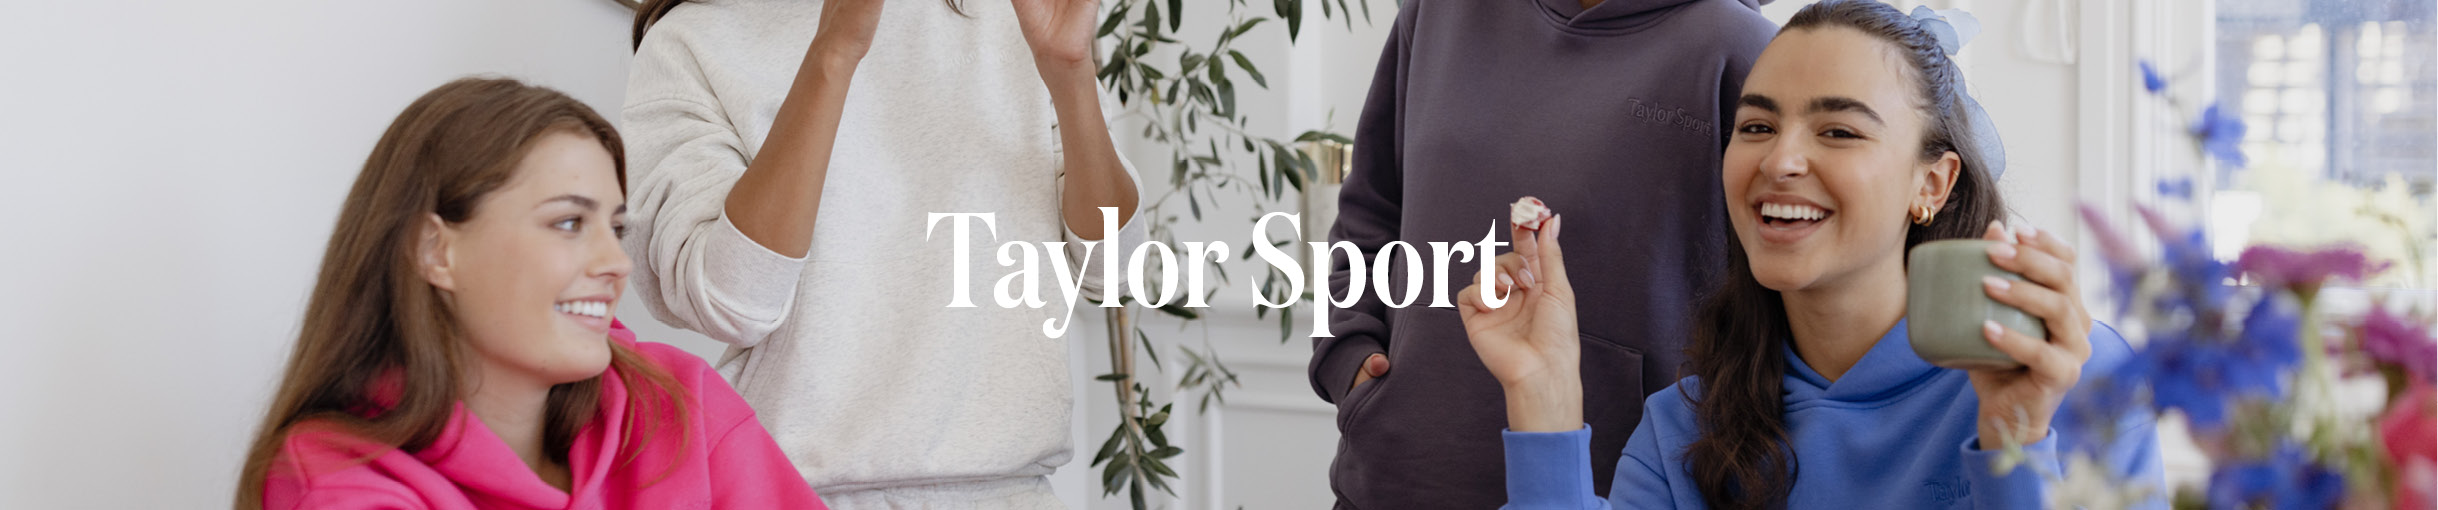 Taylor Sport